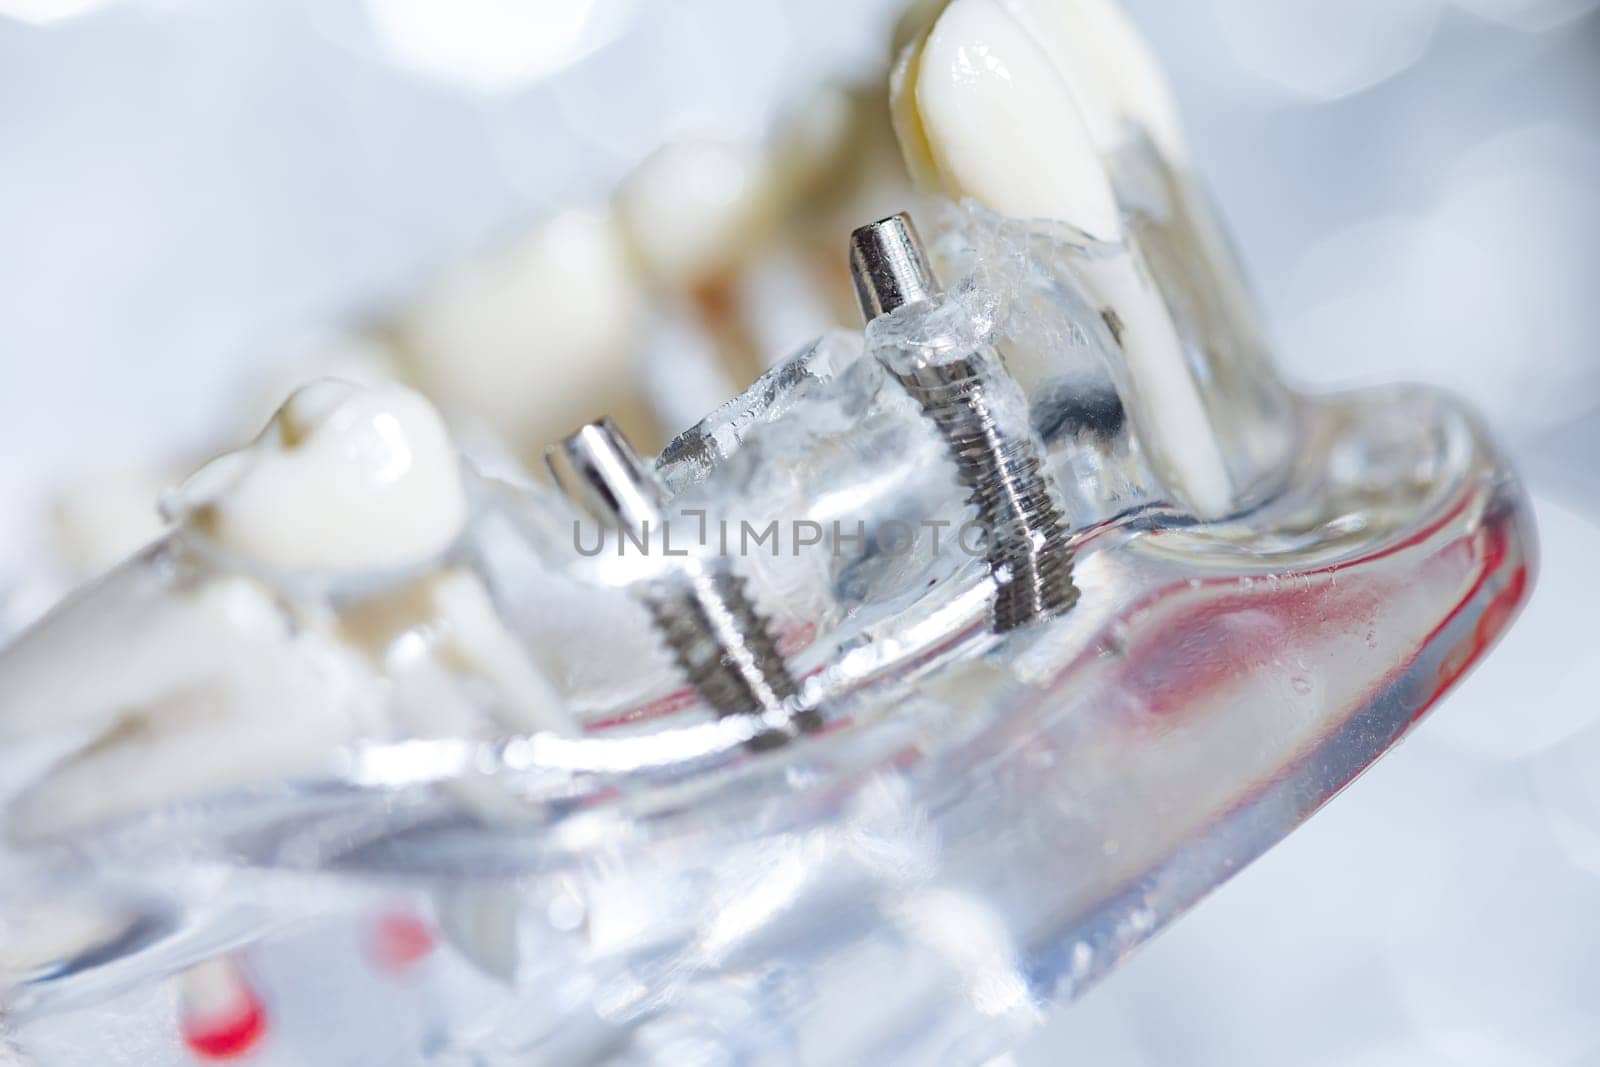 Dental tooth implant titanium prosthetic dentists model. Shallow dof